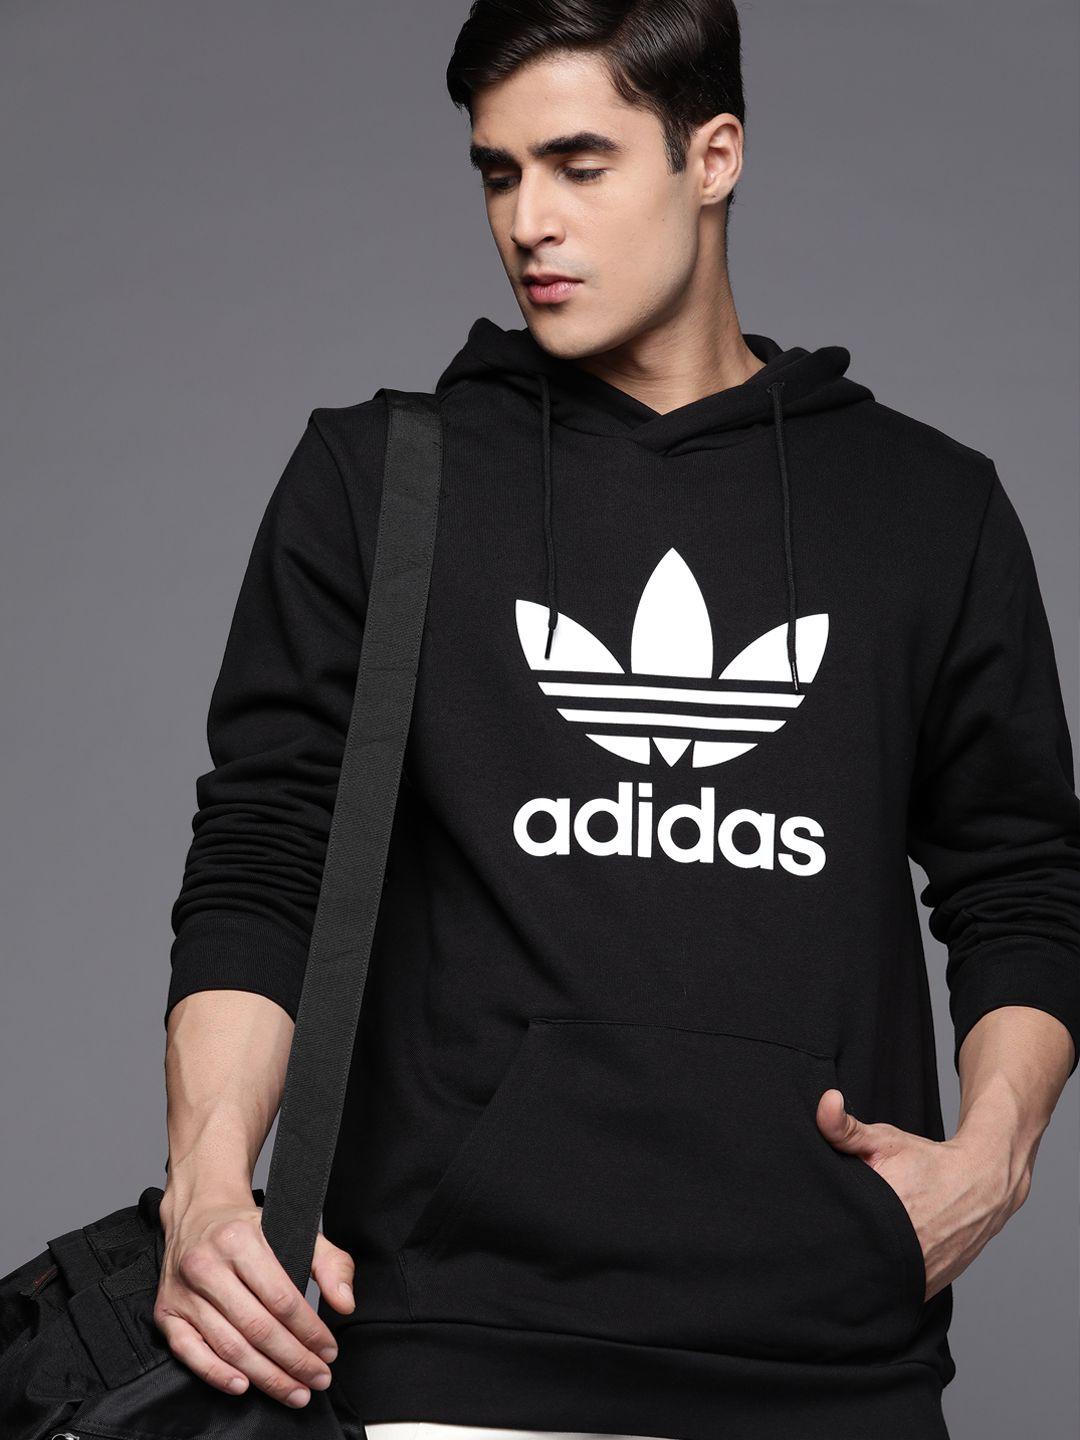 adidas-originals-men-black-trefoil-hoody-printed-pure-cotton-sweatshirt